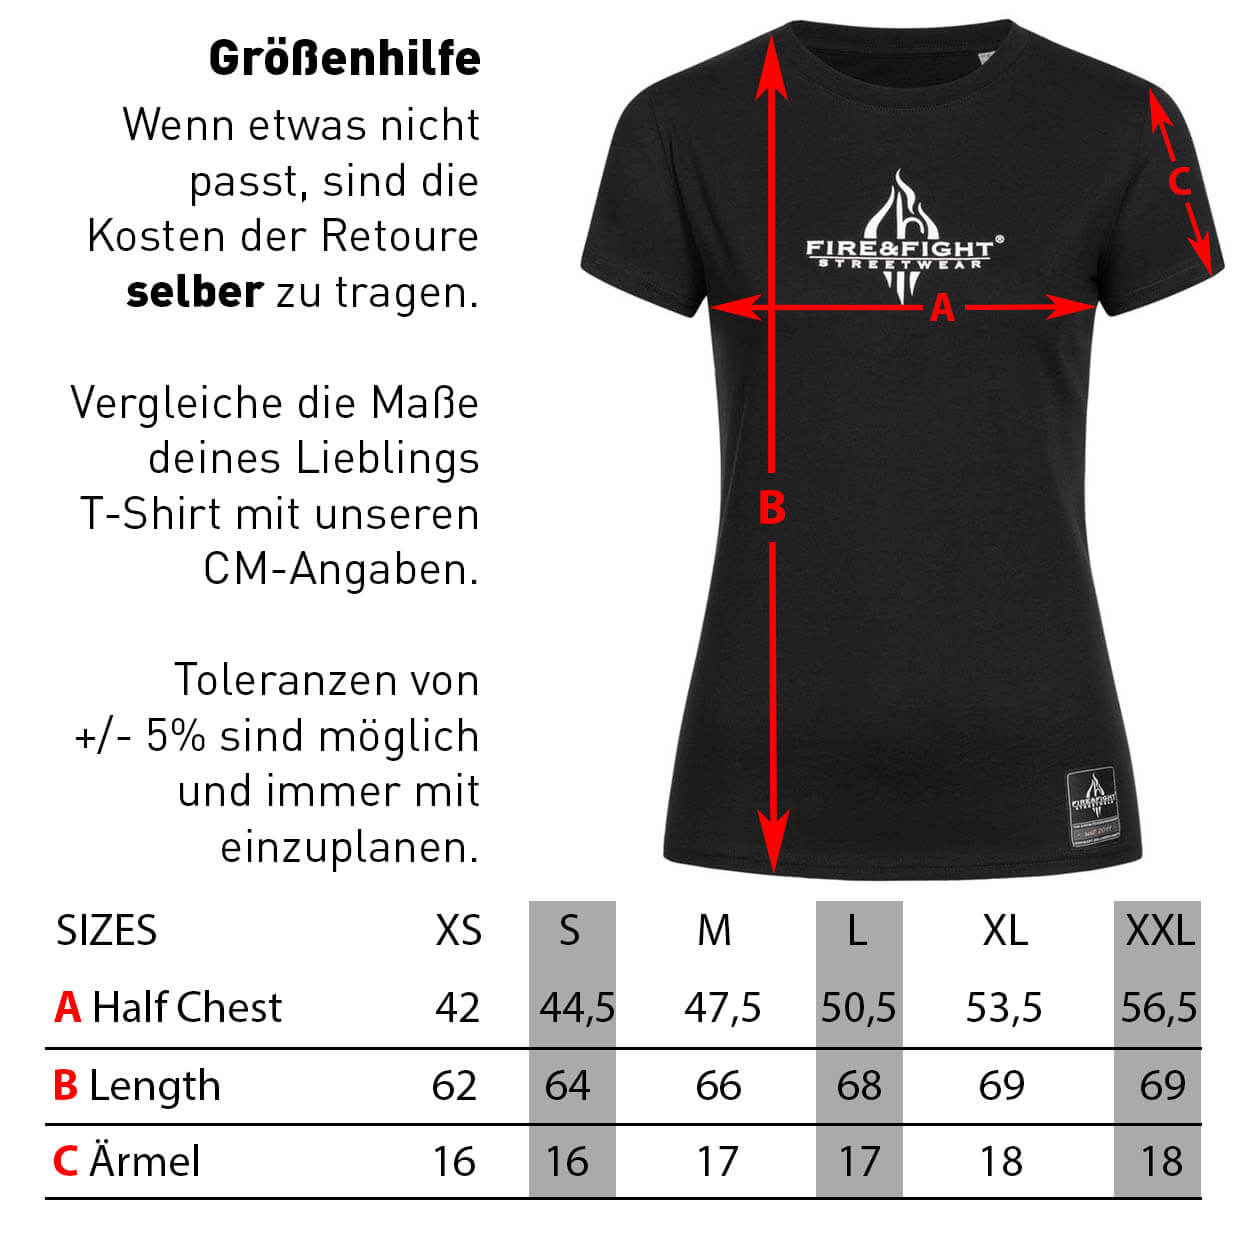 Angriffslustig® Design - Frauen T-Shirt schwarz